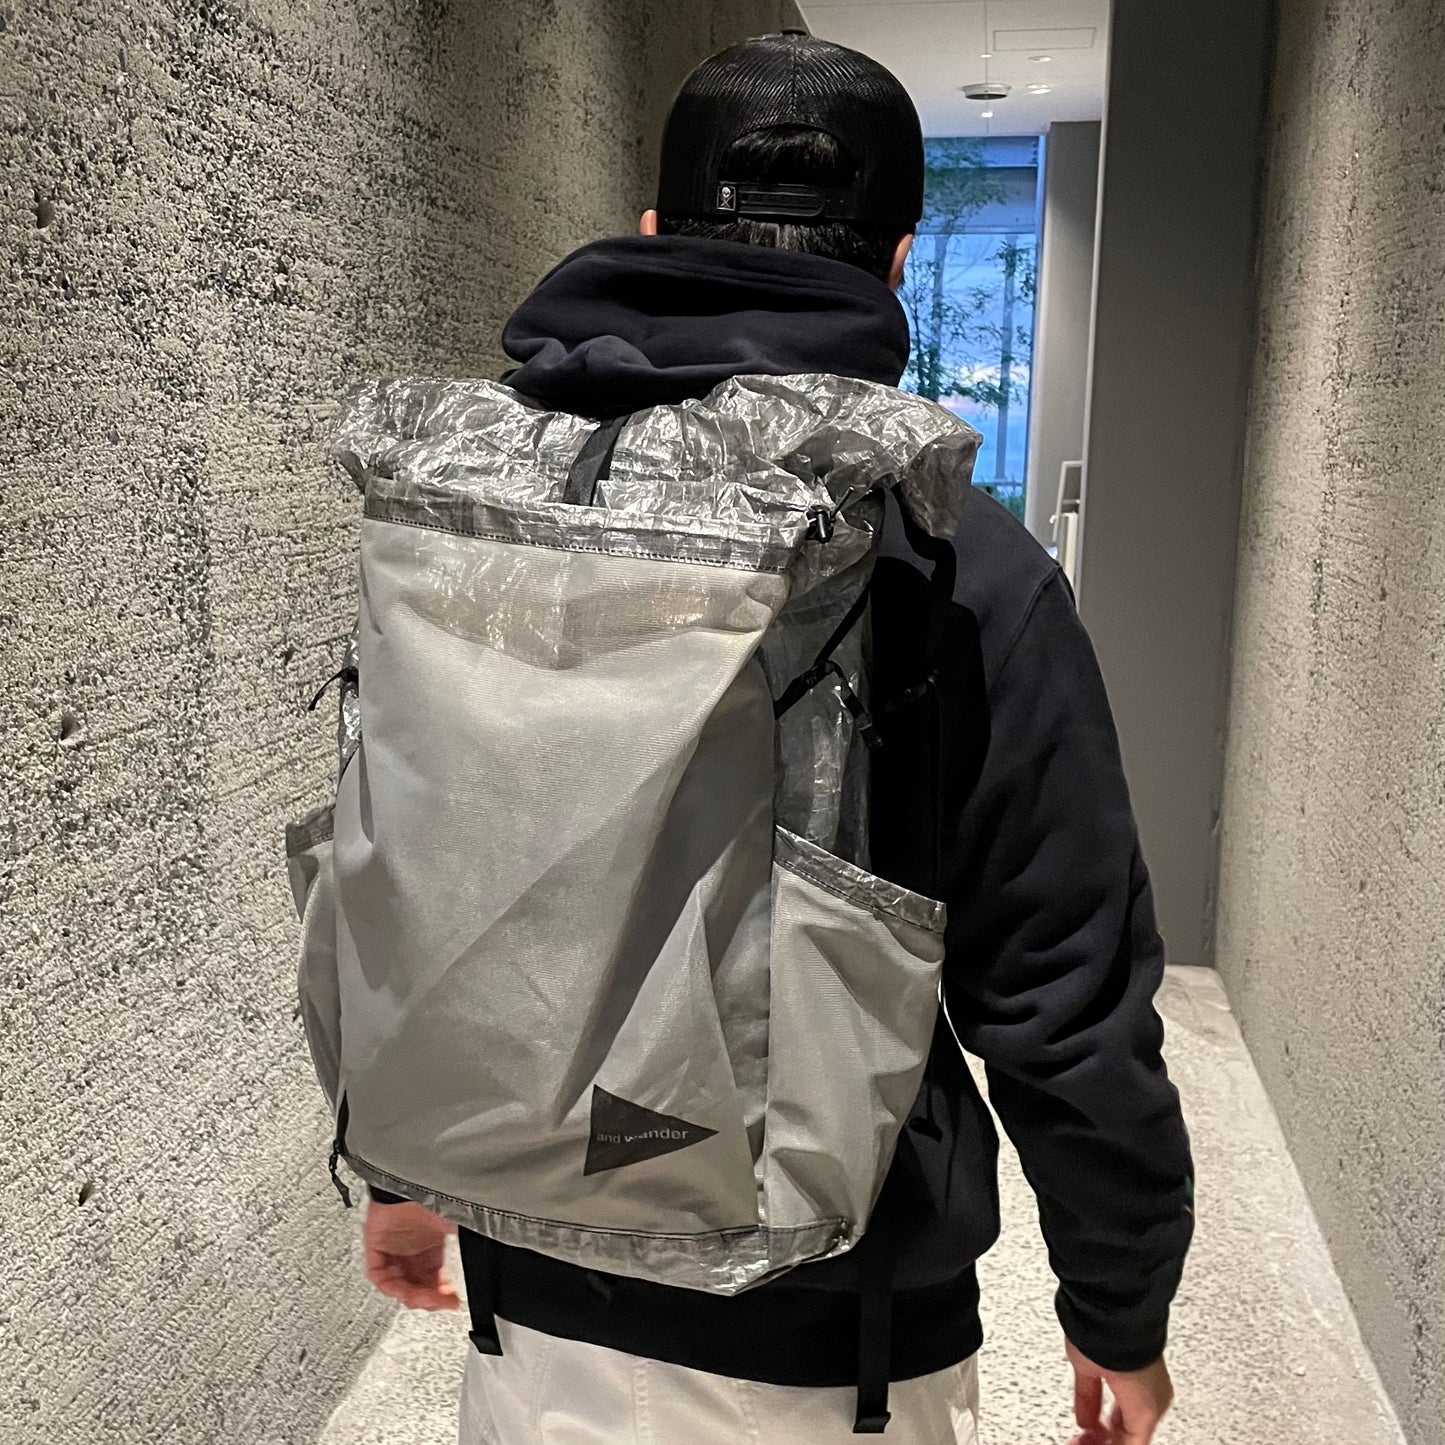 【and wander】 UL backpack with Dyneema(R)